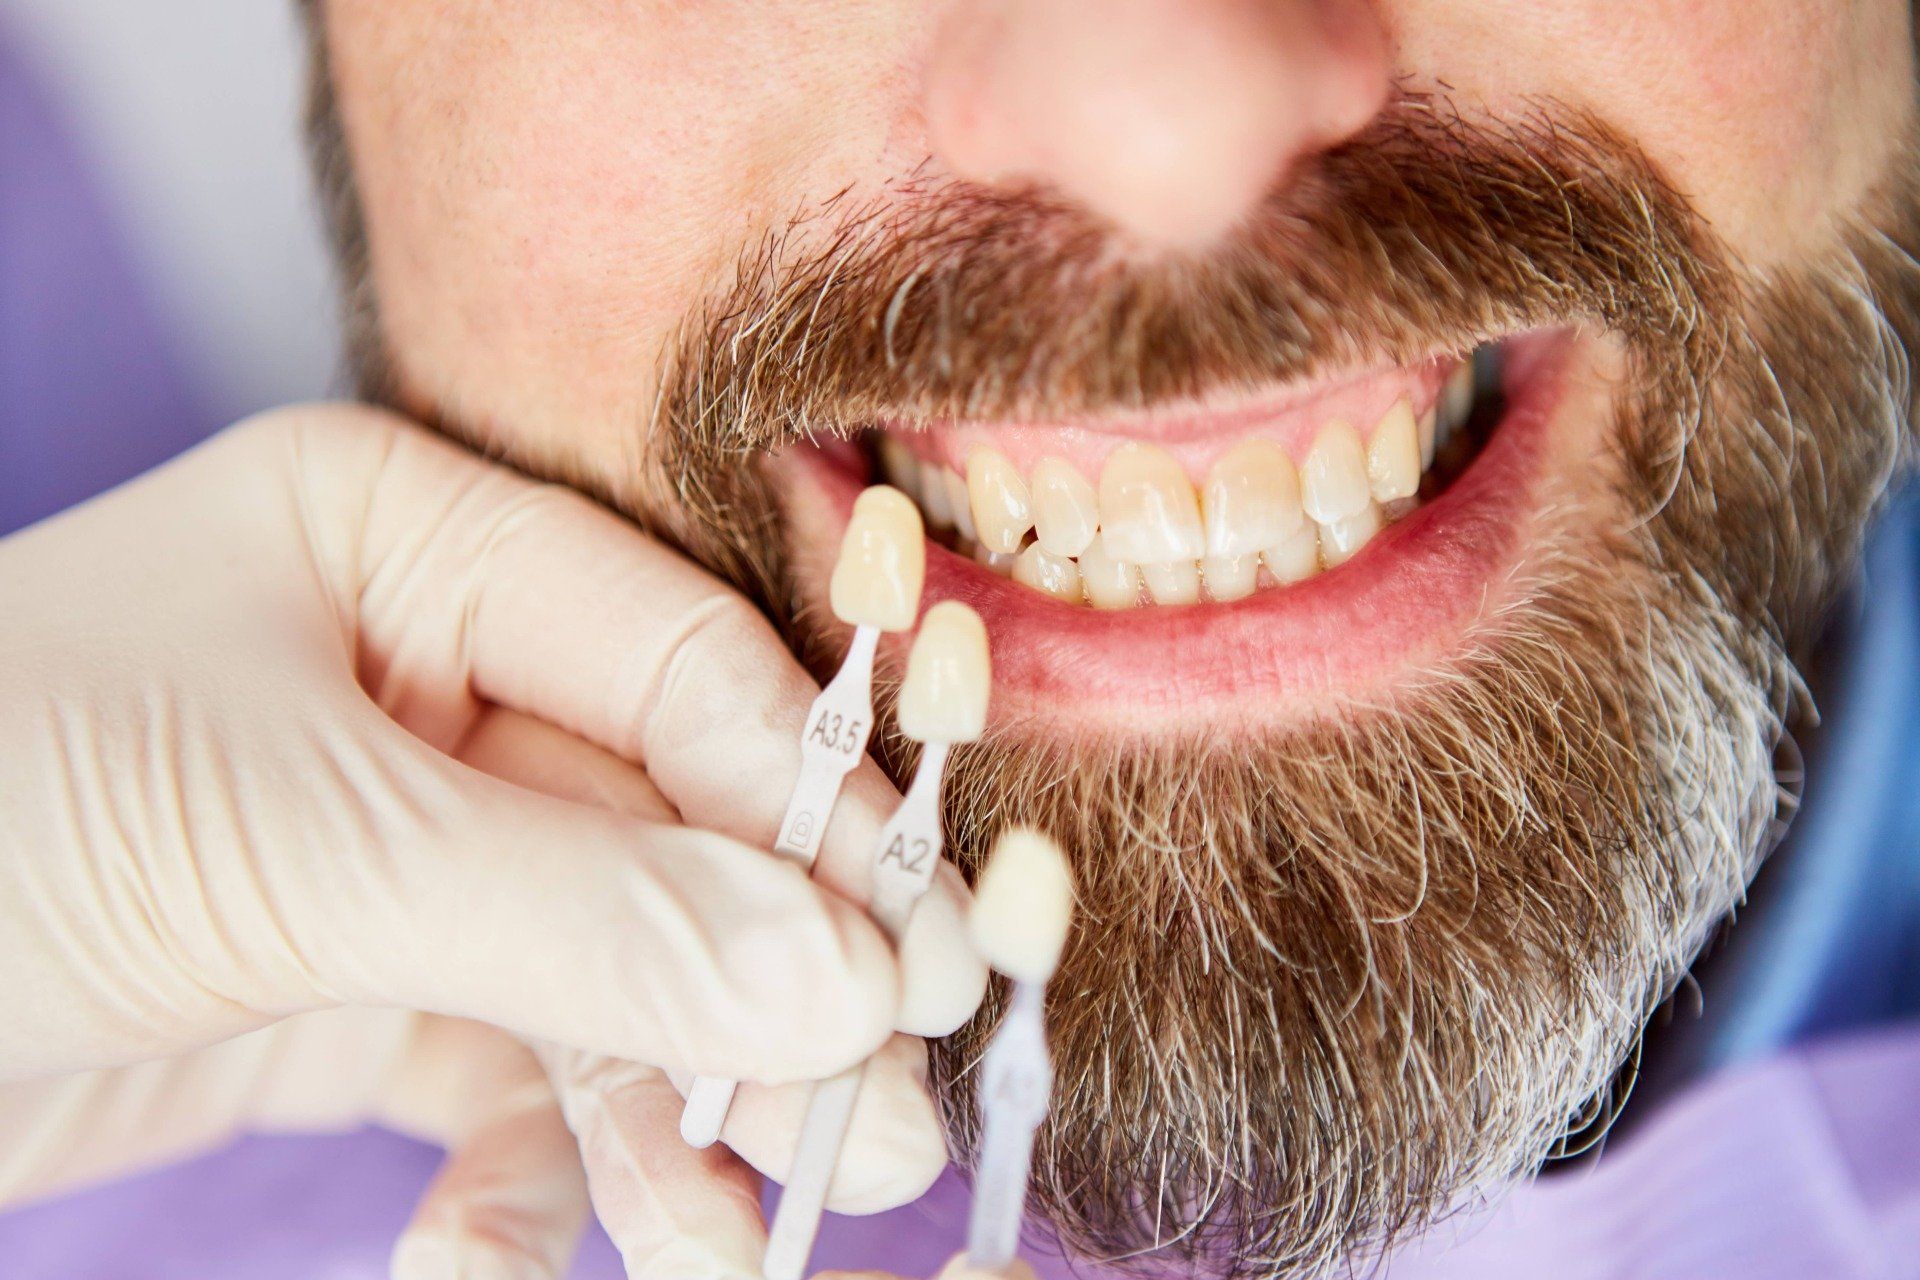 Mann mit Zahnverfärbung